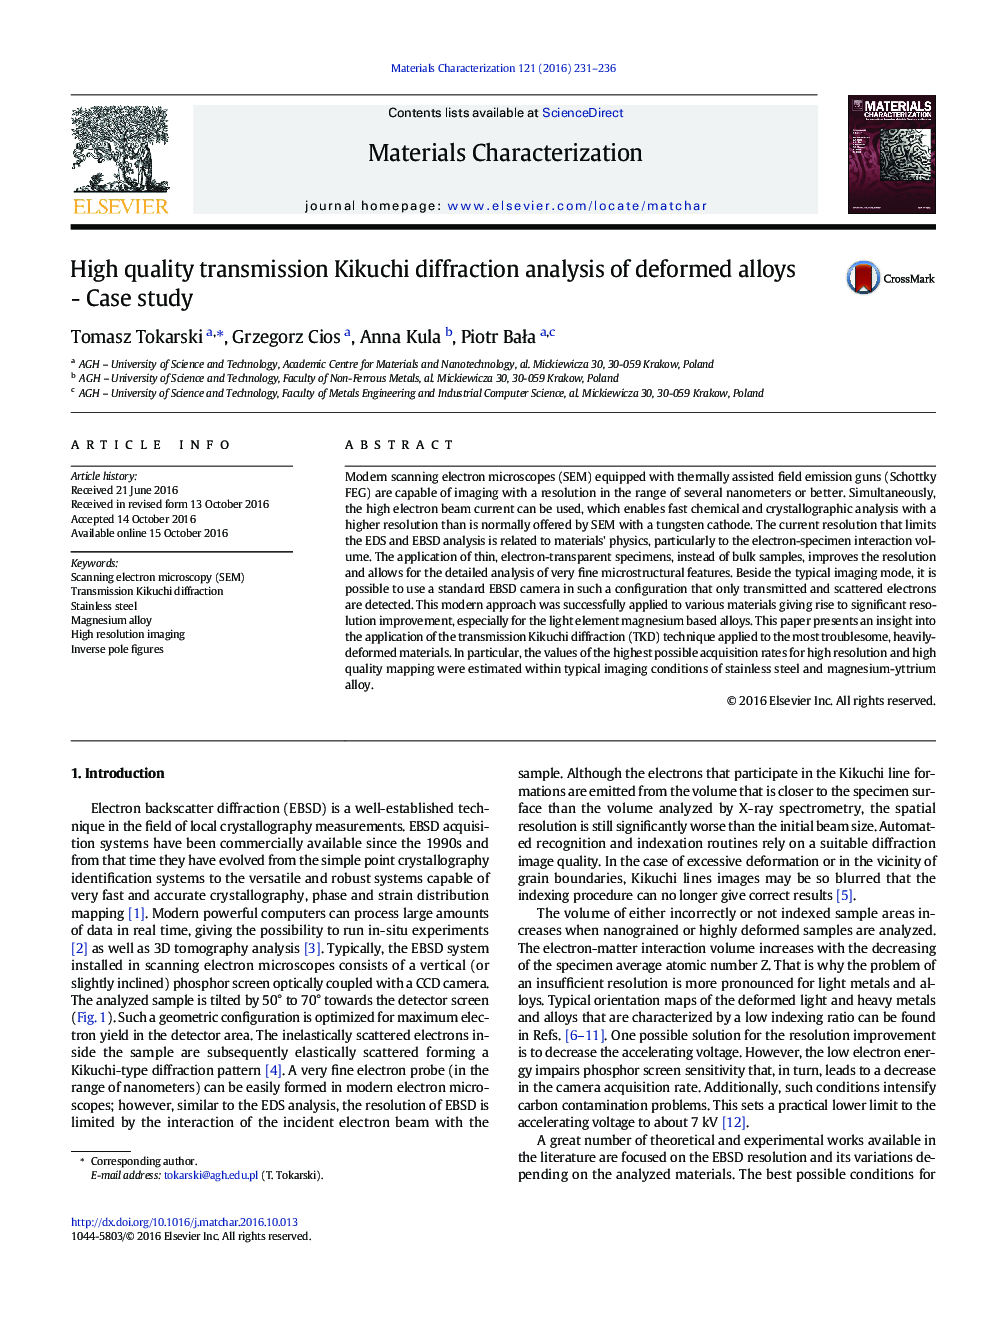 High quality transmission Kikuchi diffraction analysis of deformed alloys - Case study